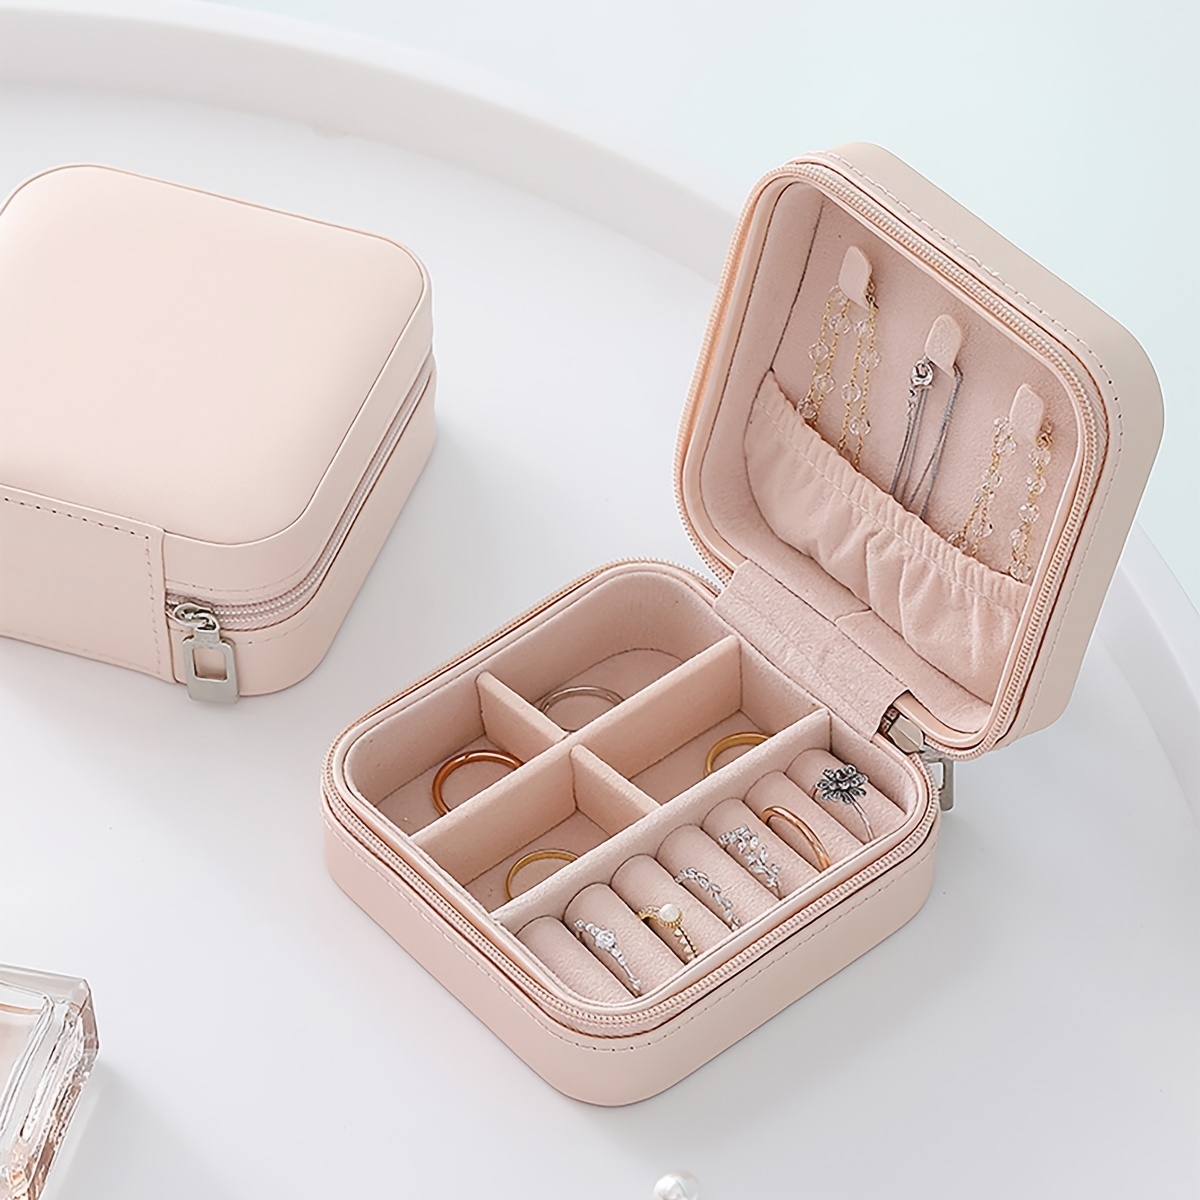 Portable Mini Jewelry Organizer Box Storage Jewellery Casket Makeup PU  Leather Beauty Travel Jewelry Packaging & Display Case